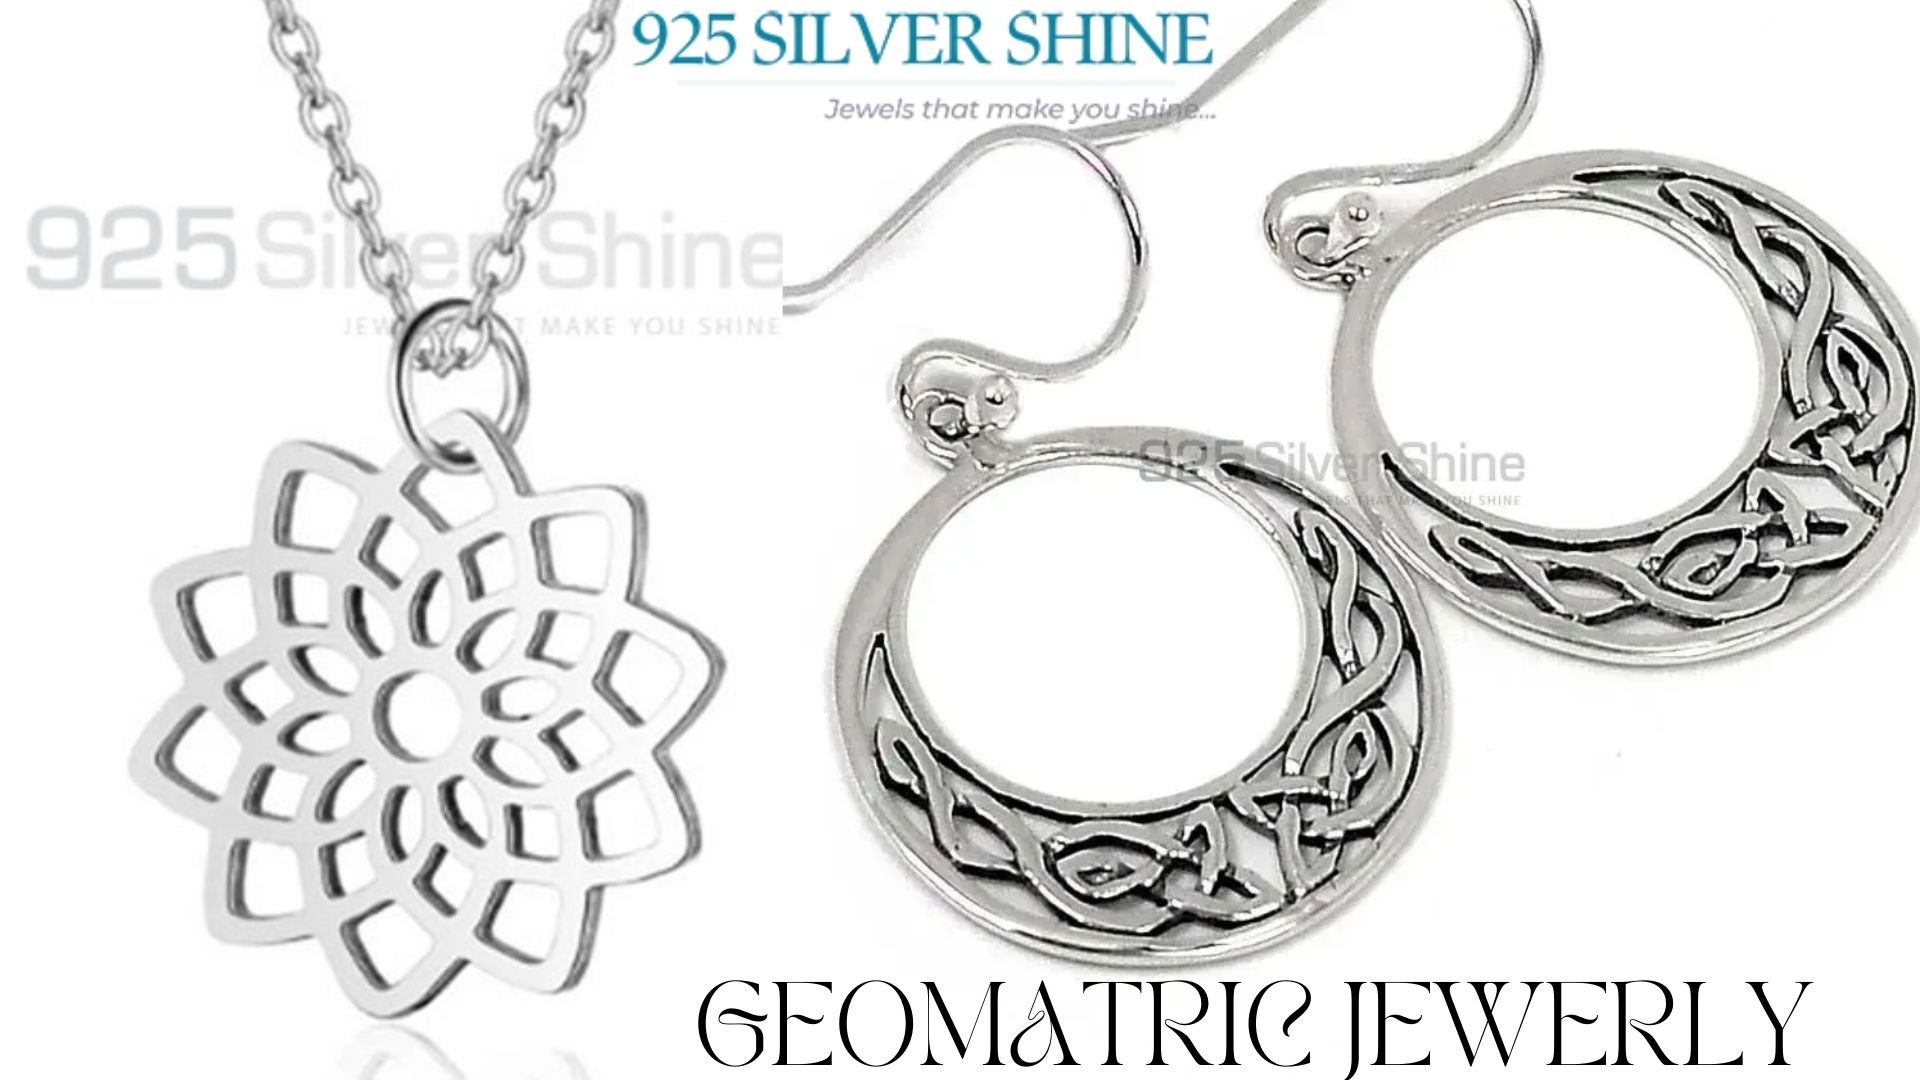 geomatrical jewelry, geomatric jewelry, geomatric symbol jewelry